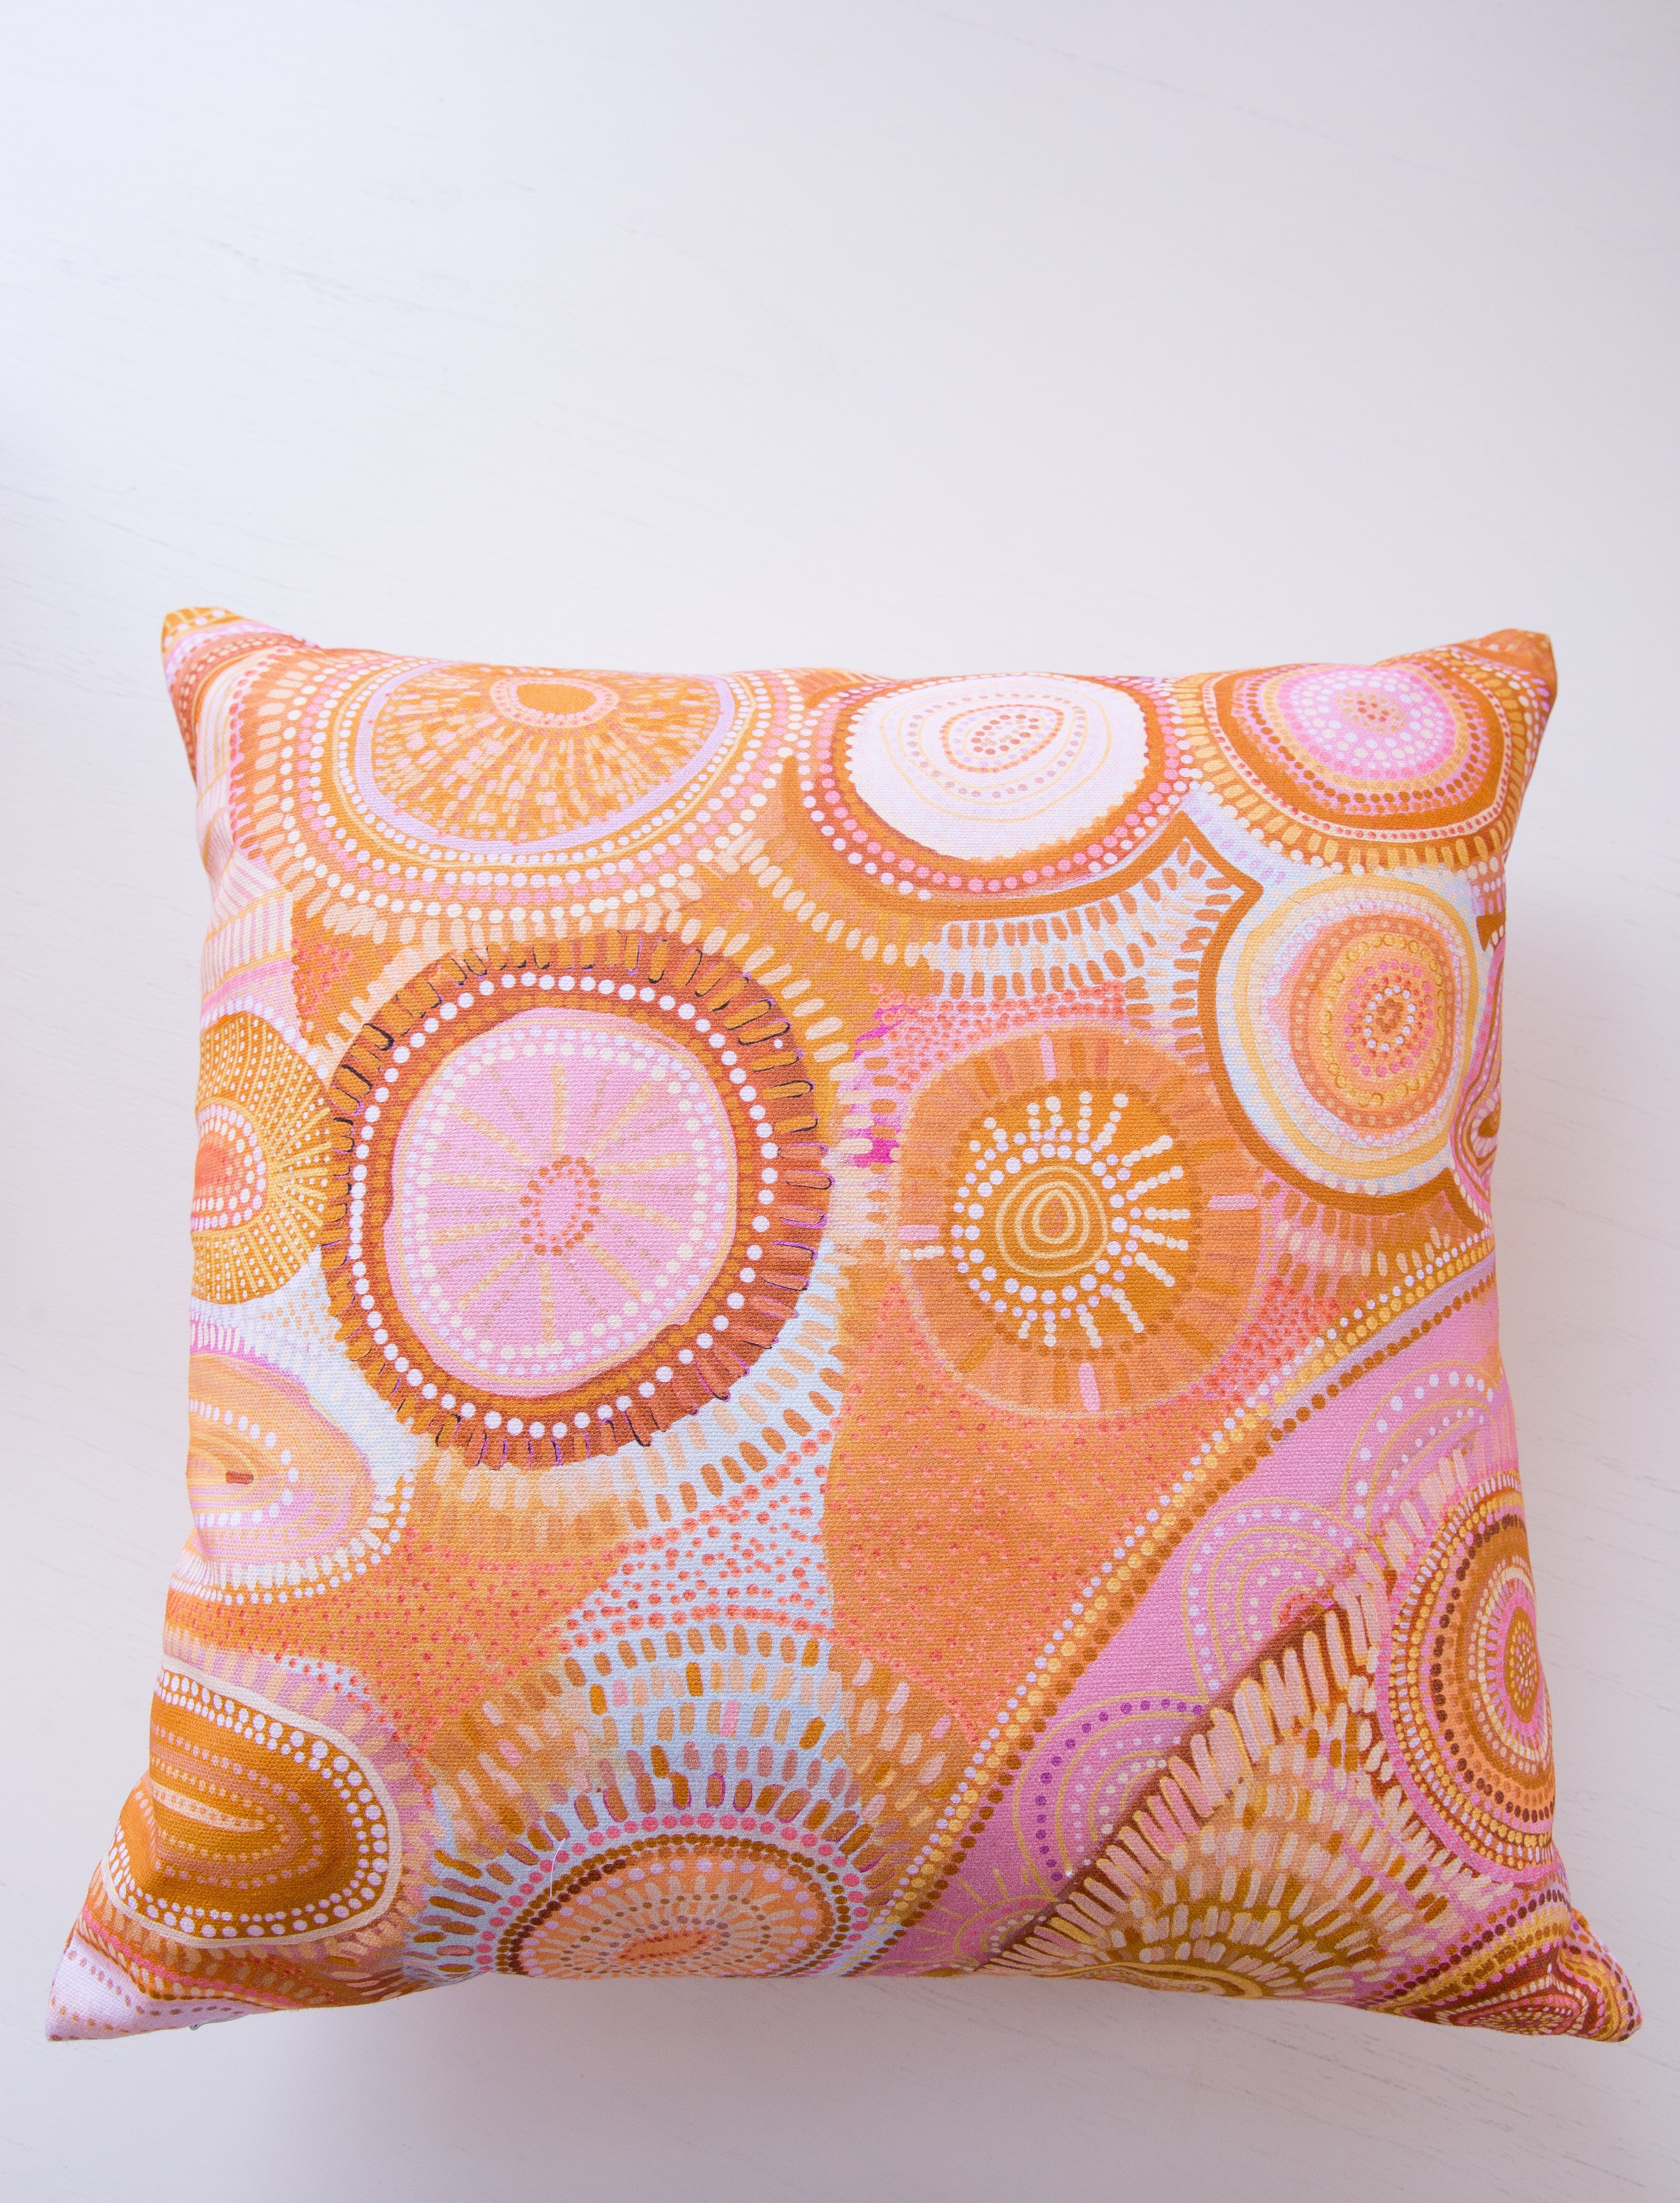 The seven sisters II - Organic Art cushion